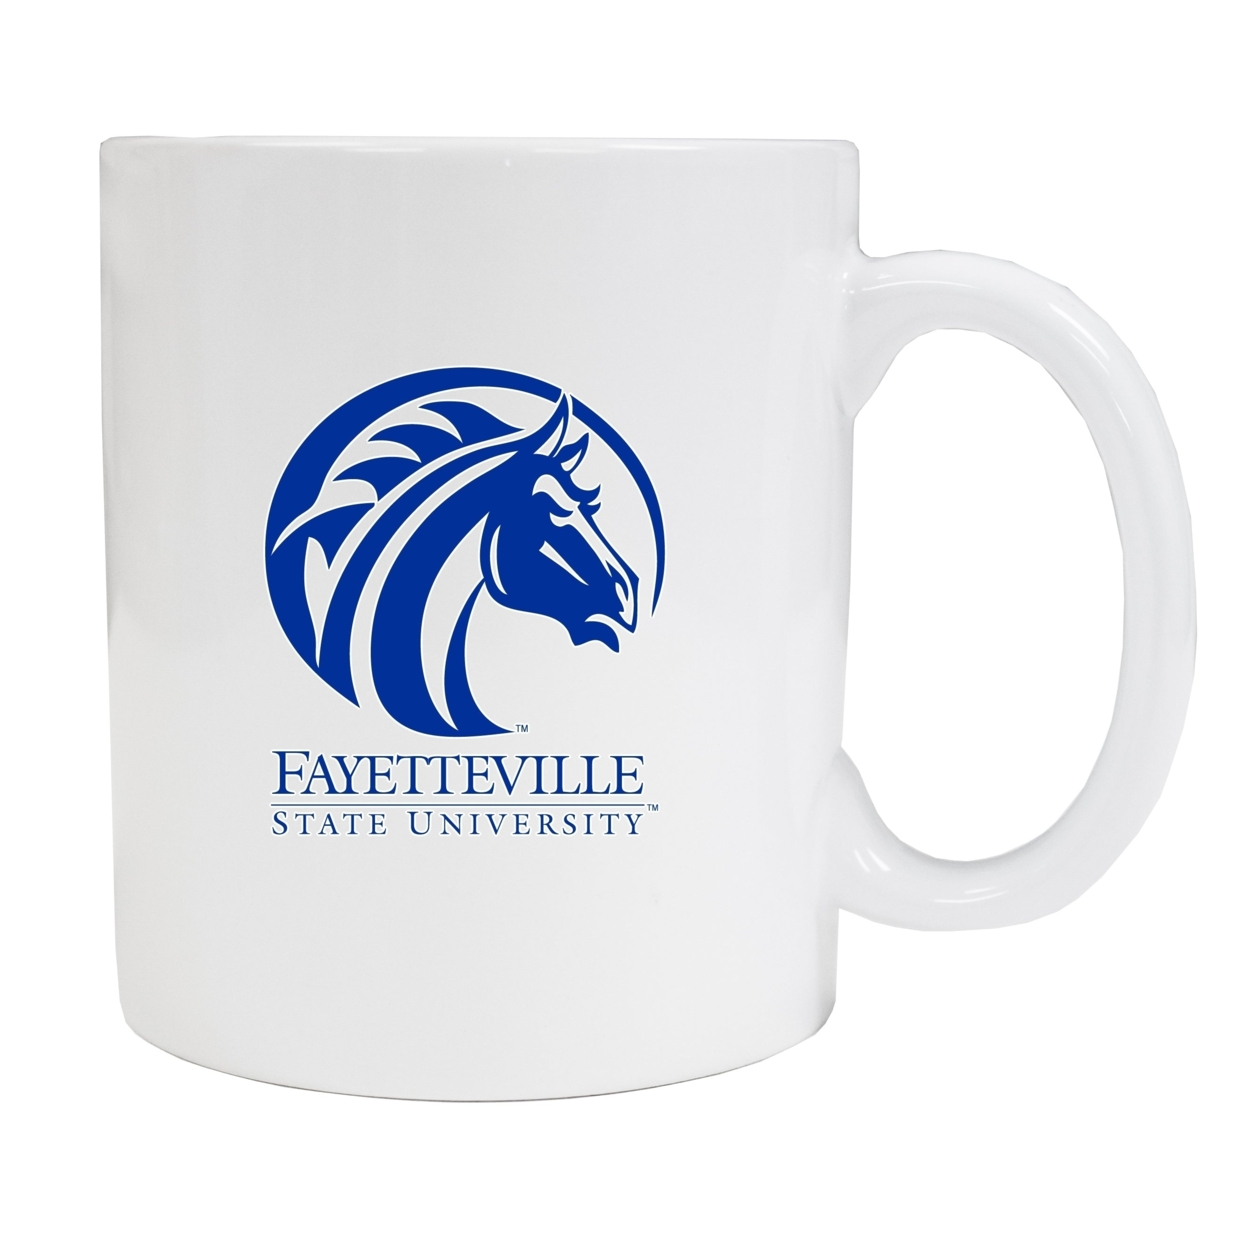 Fayetteville State University White Ceramic Mug (White).